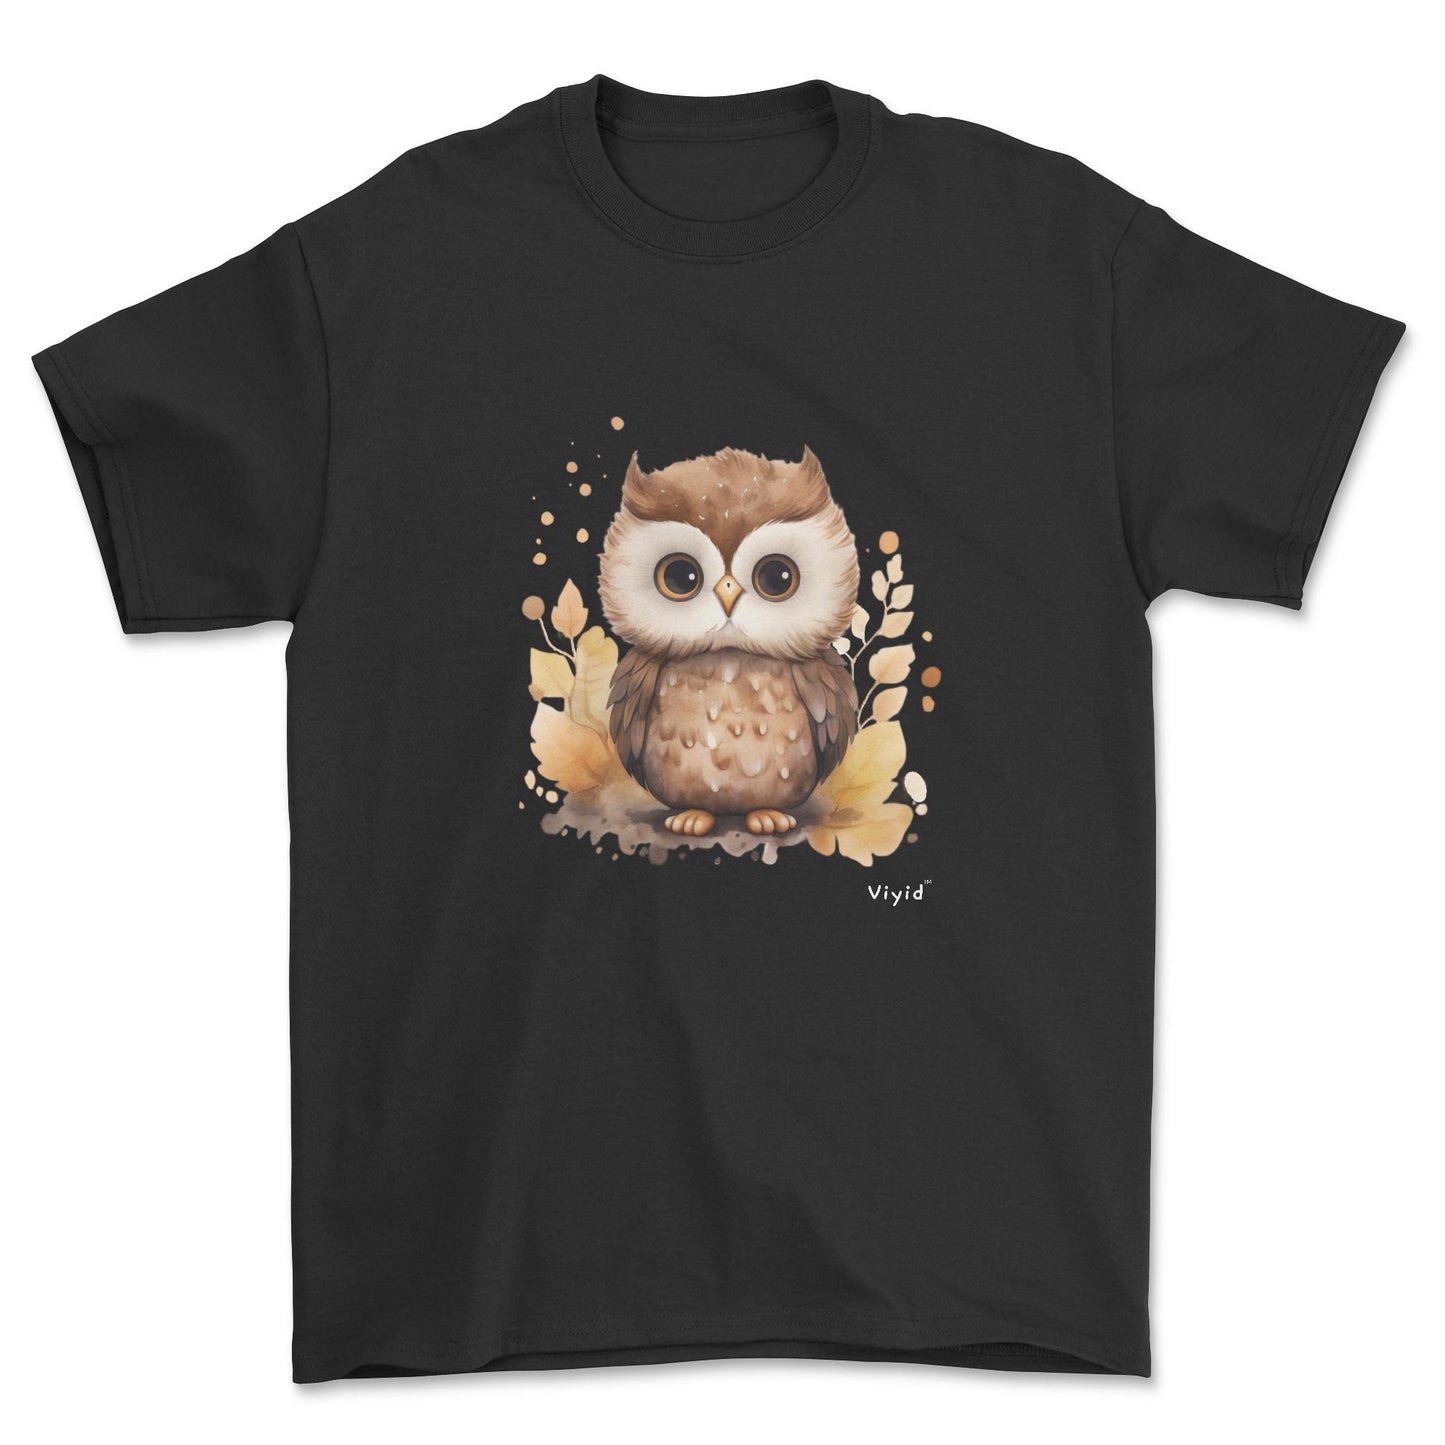 nocturnal owl adult t-shirt black